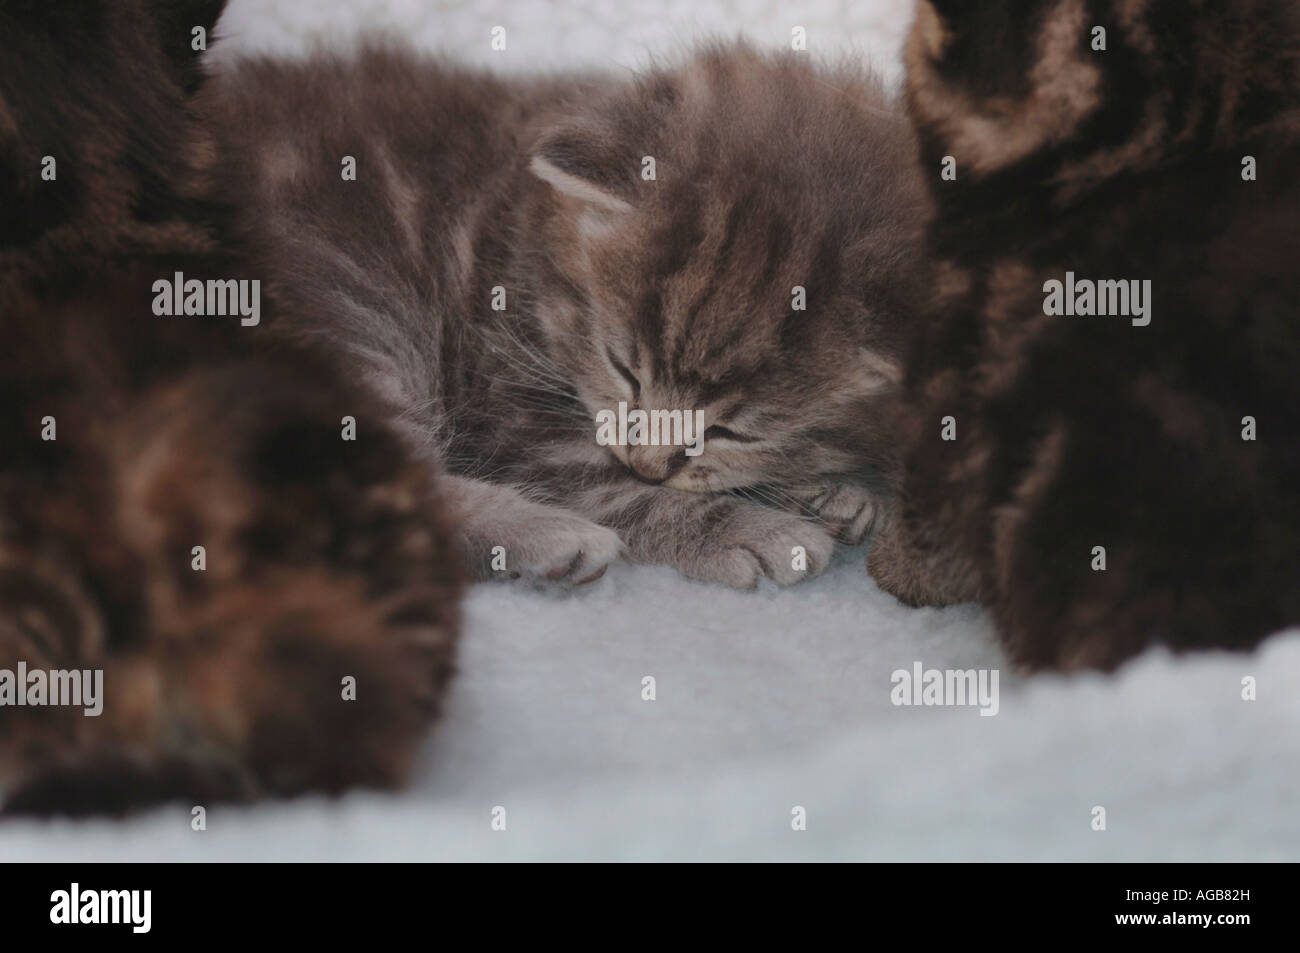 3 Week Old Kittens Sleeping. Stock Photo